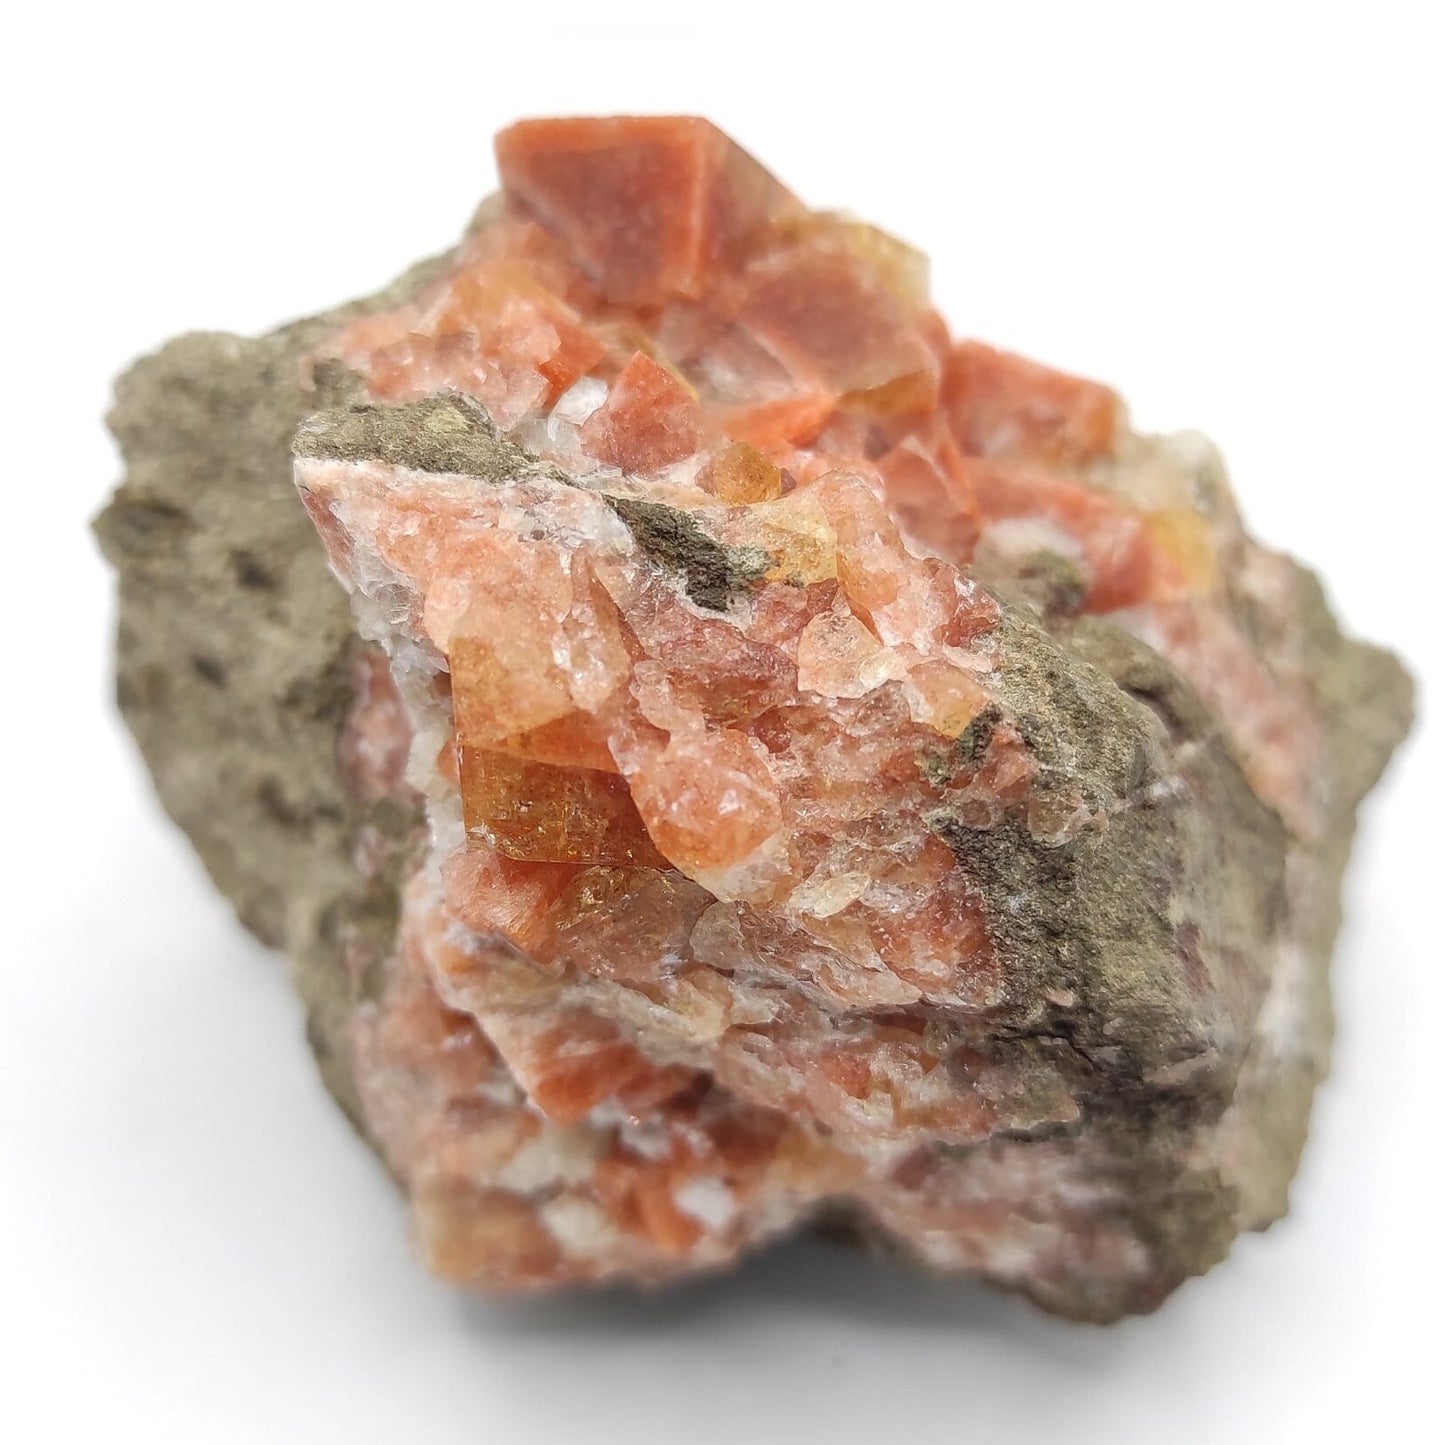 181g Chabazite Specimen - Wasson Bluff, Parrsboro, Nova Scotia - Orange Chabazite Crystal Specimen - High Quality Chabazite from Canada